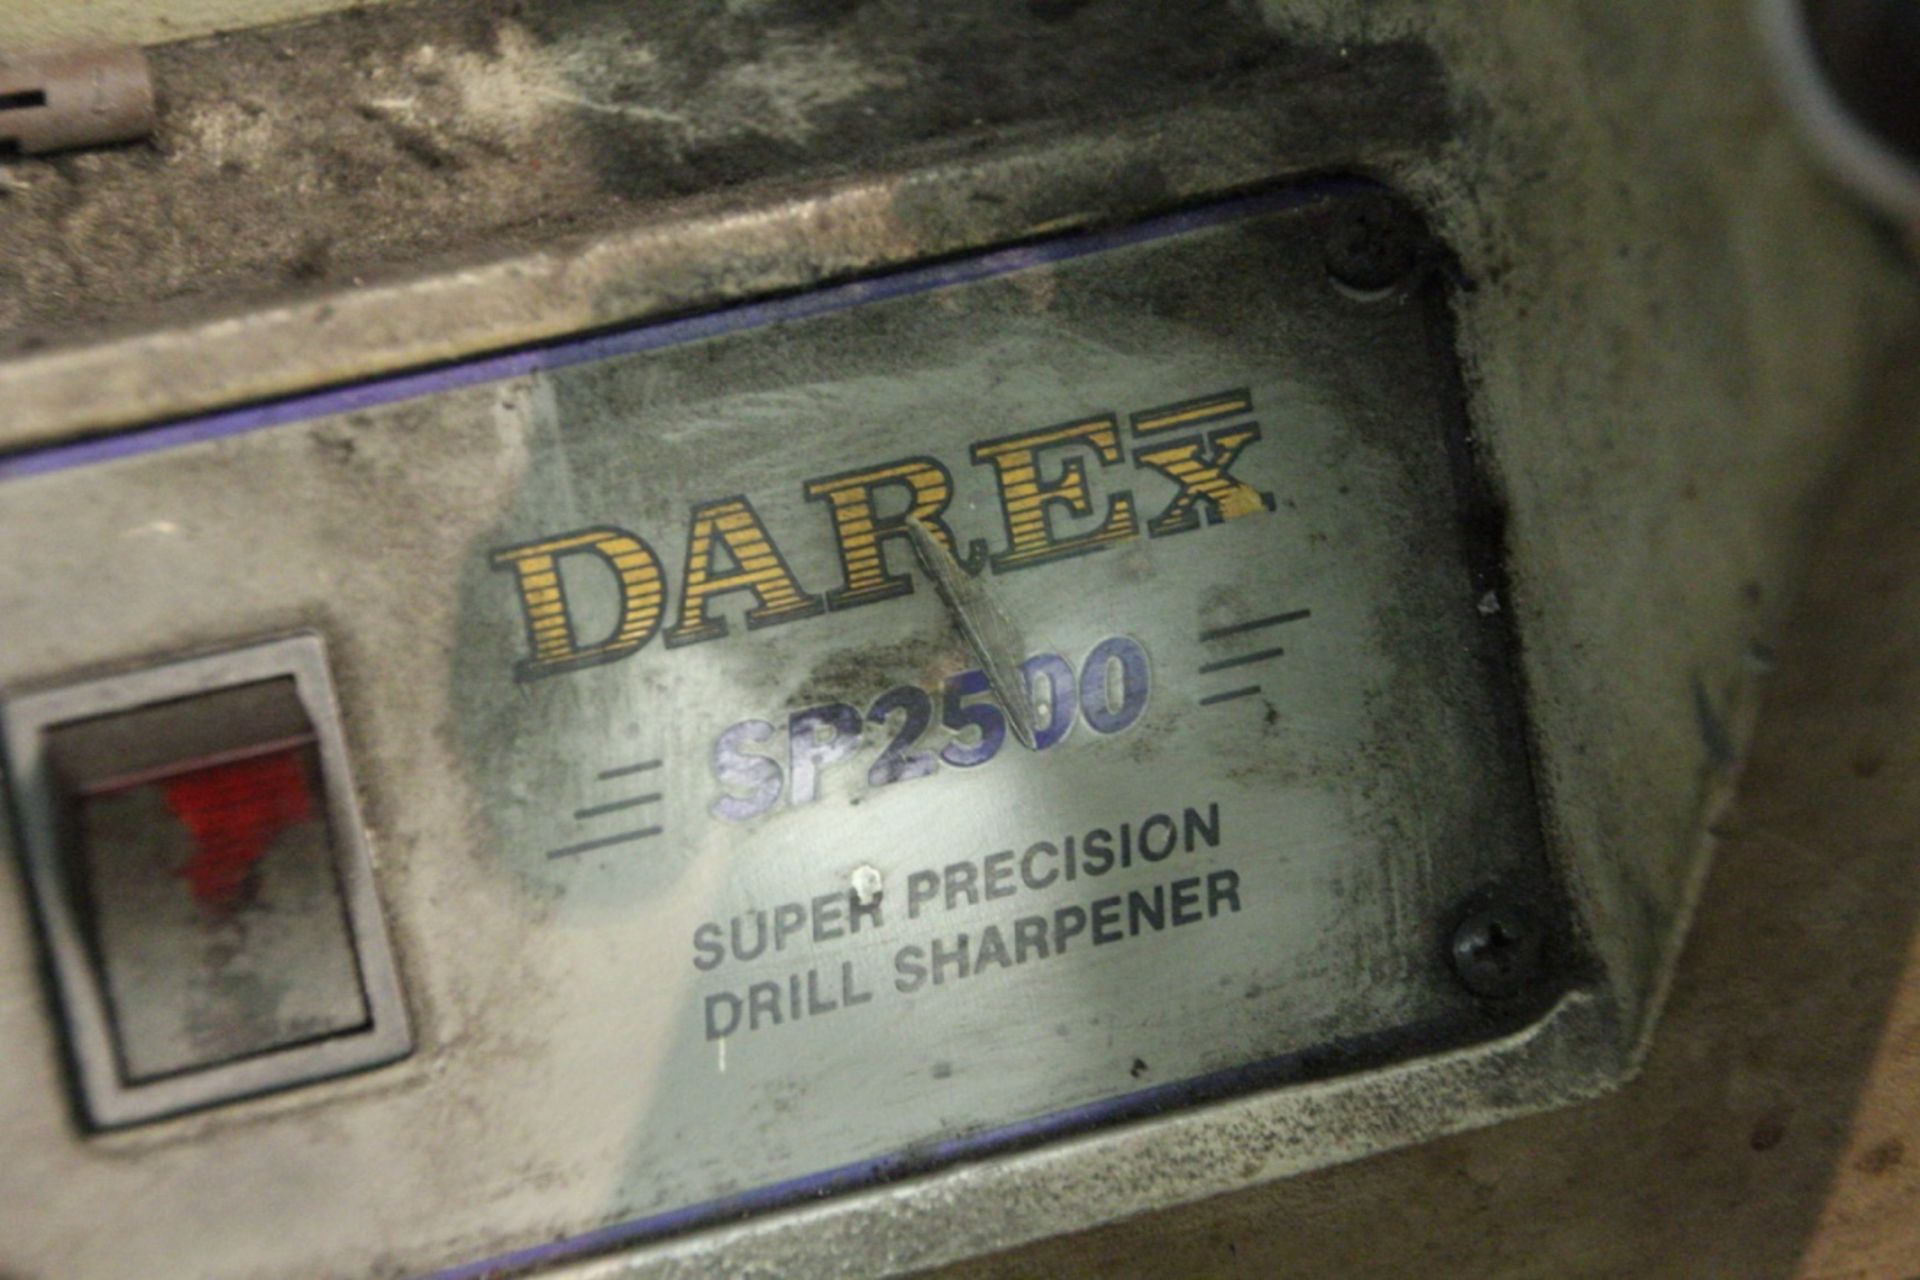 Darex SP2500 Super Precision Drill Sharpener, 240V - Image 3 of 6